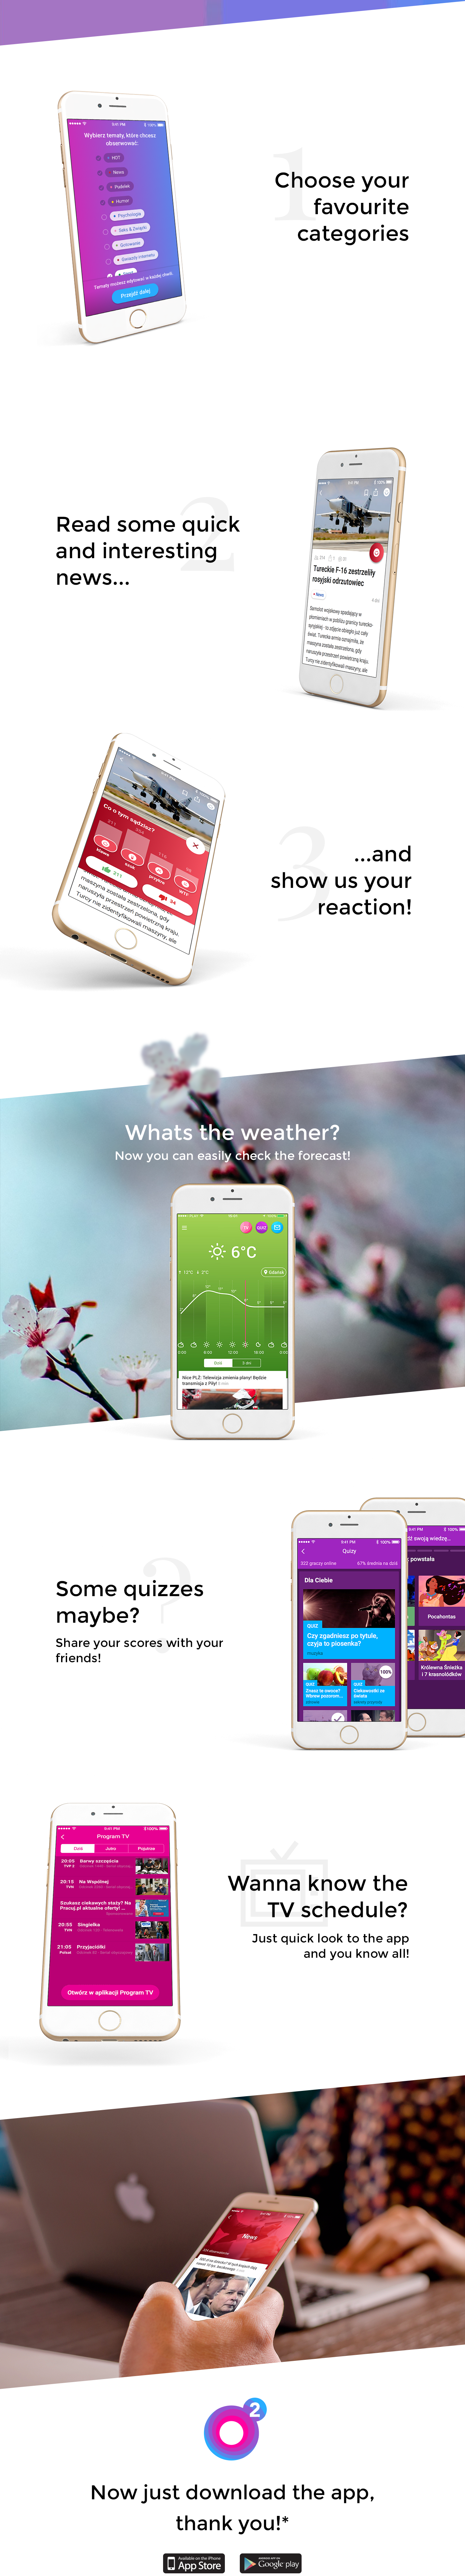 o2 serce internetu app news Quiz weather ios android Native